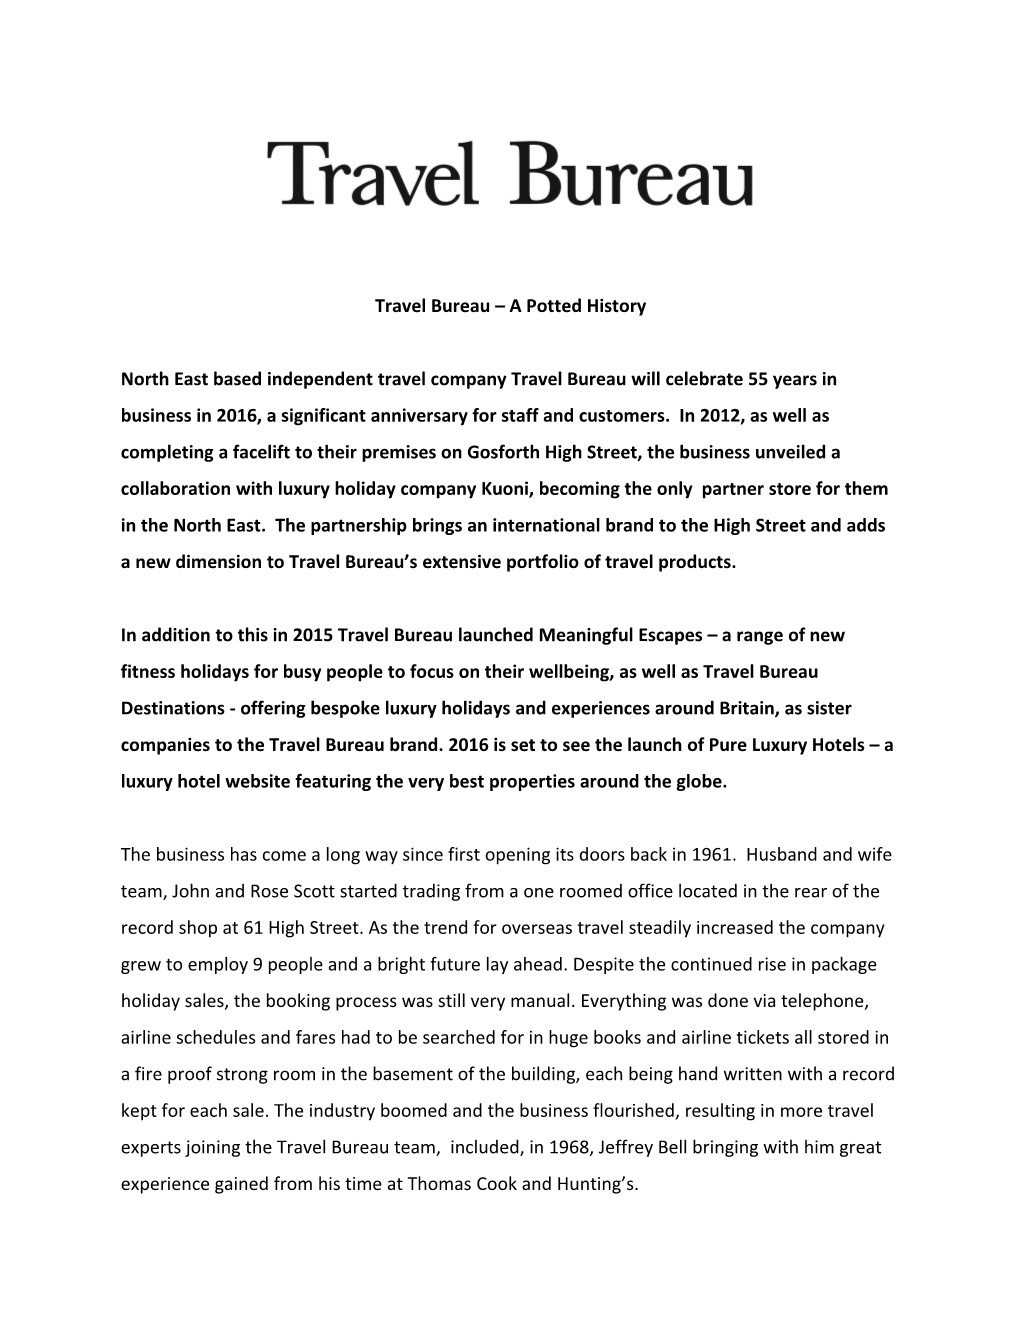 Travel Bureau a Potted History